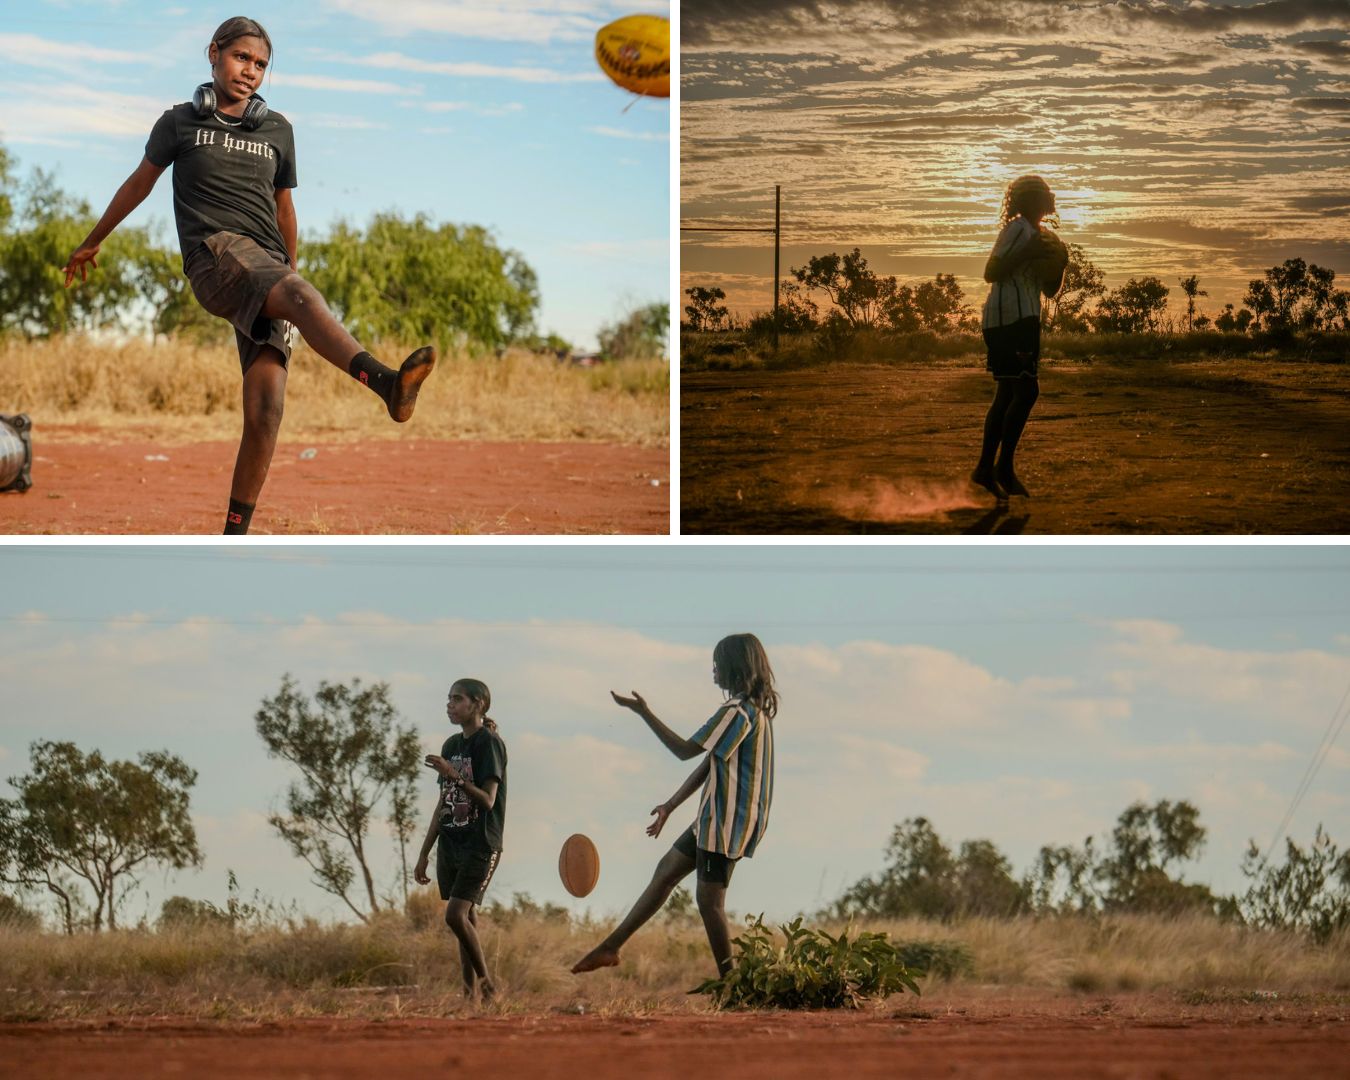 Players kicking balls at sunset